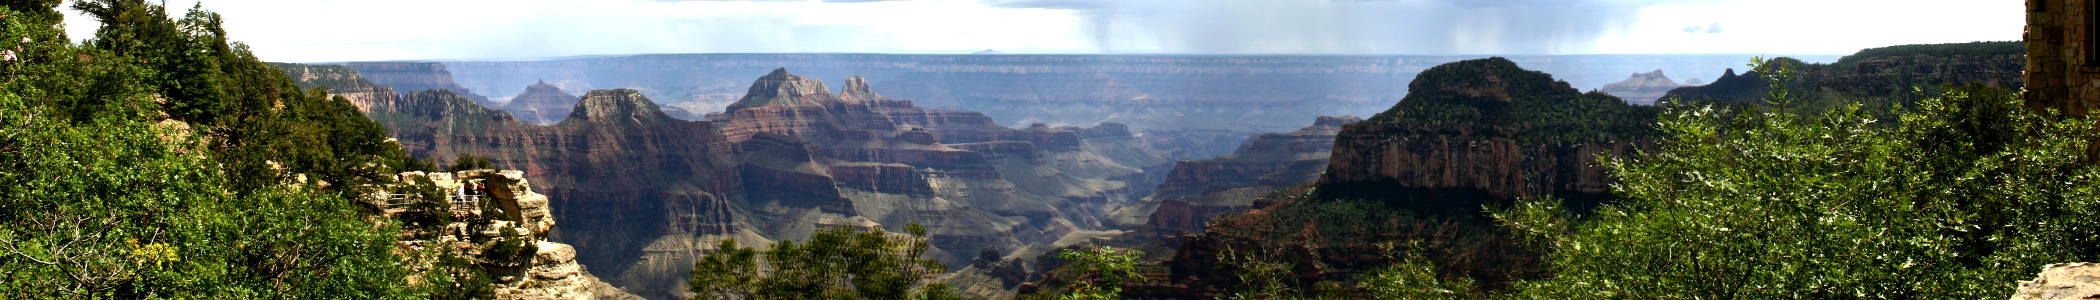 Grand Canyon-banner2.jpg